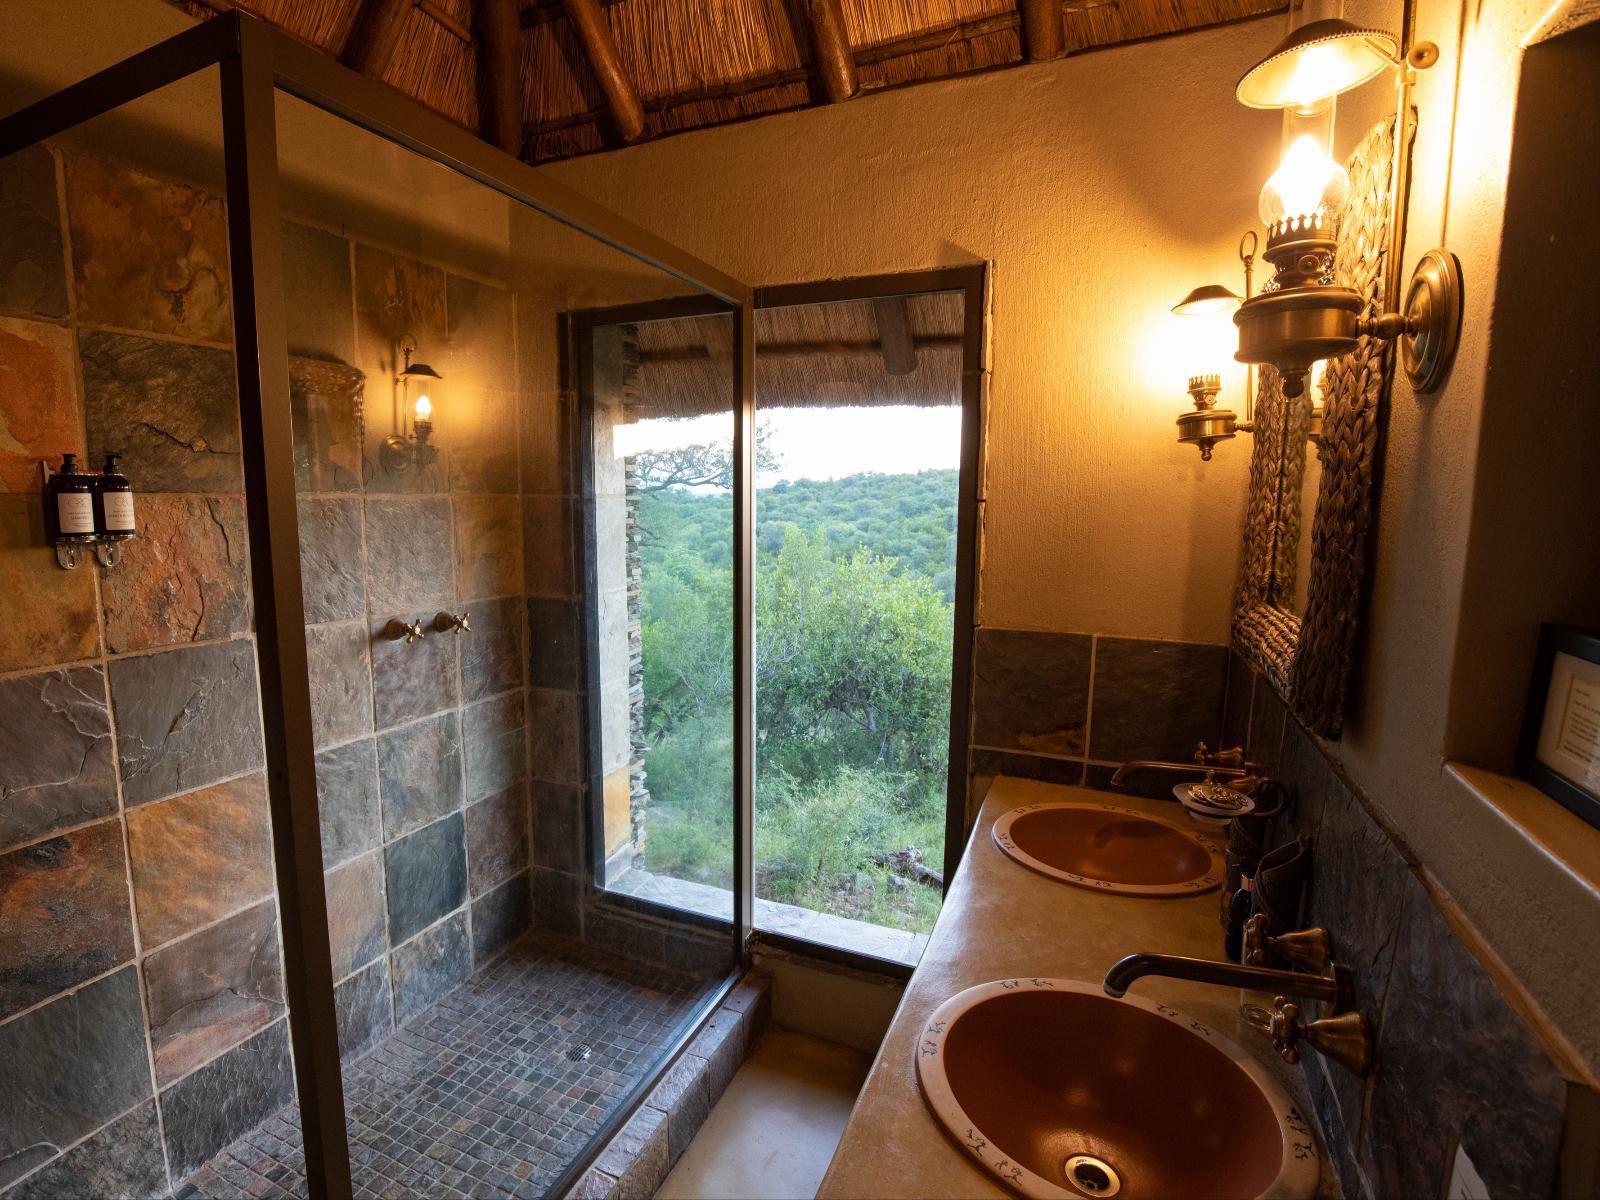 Parsons Hilltop Safari Camp Hoedspruit Limpopo Province South Africa Bathroom